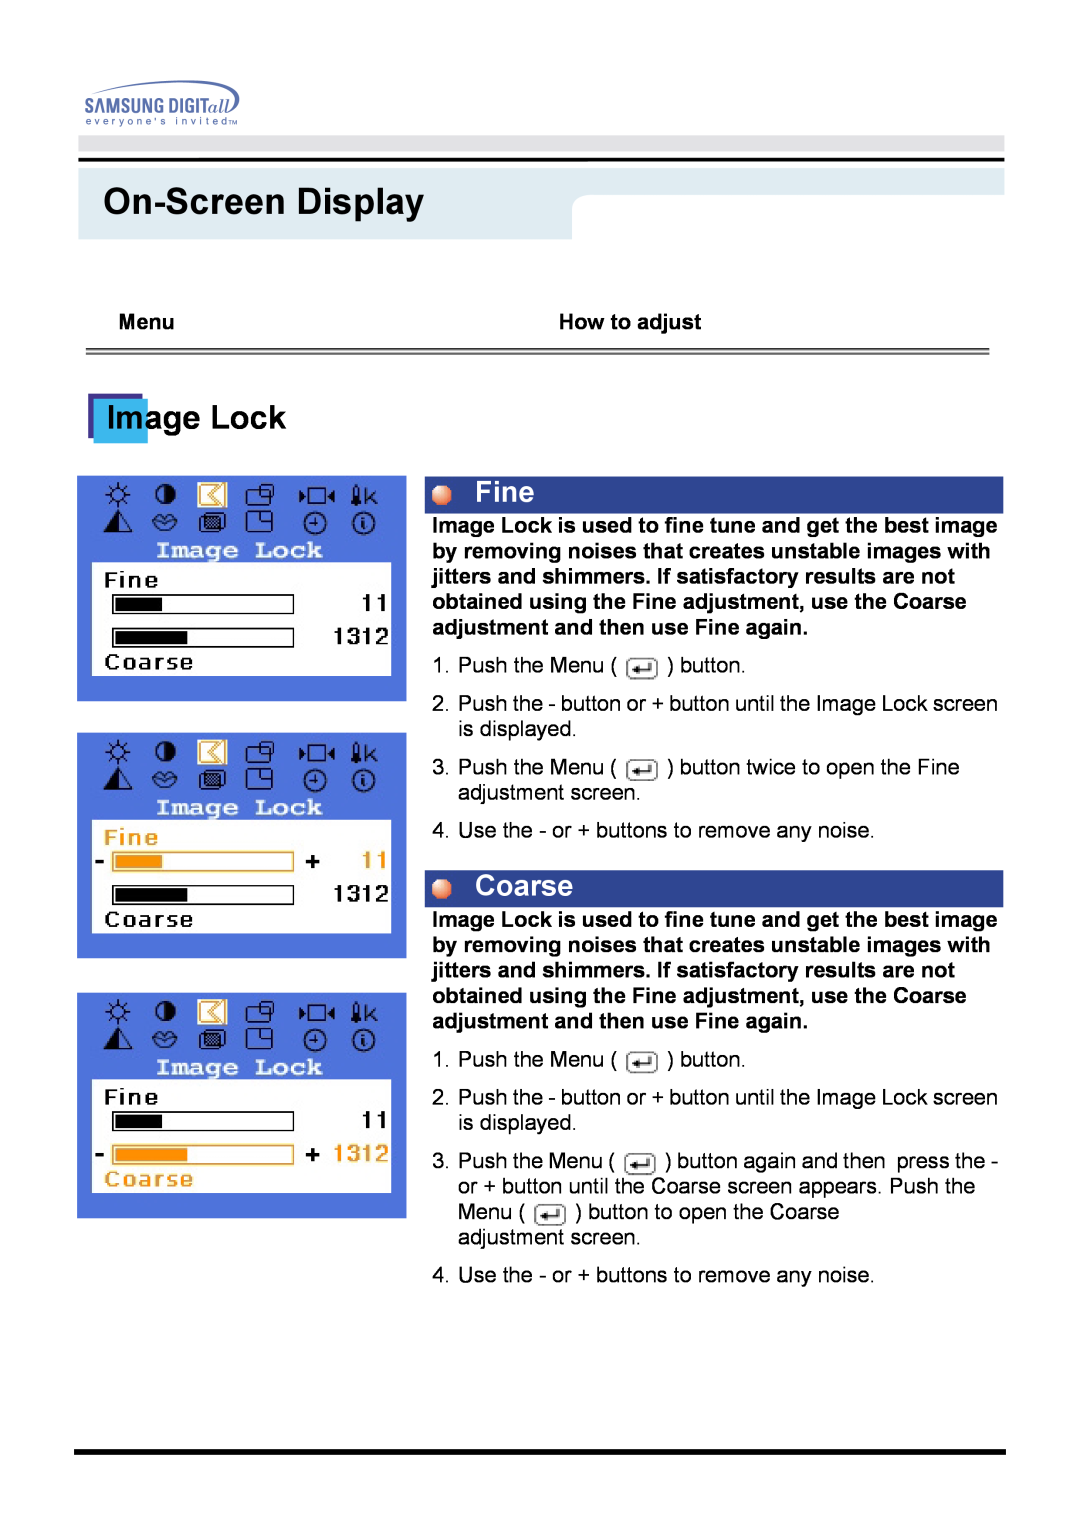 Samsung 760TFT manual Image Lock, Fine, Coarse, On-Screen Display, Menu, How to adjust 